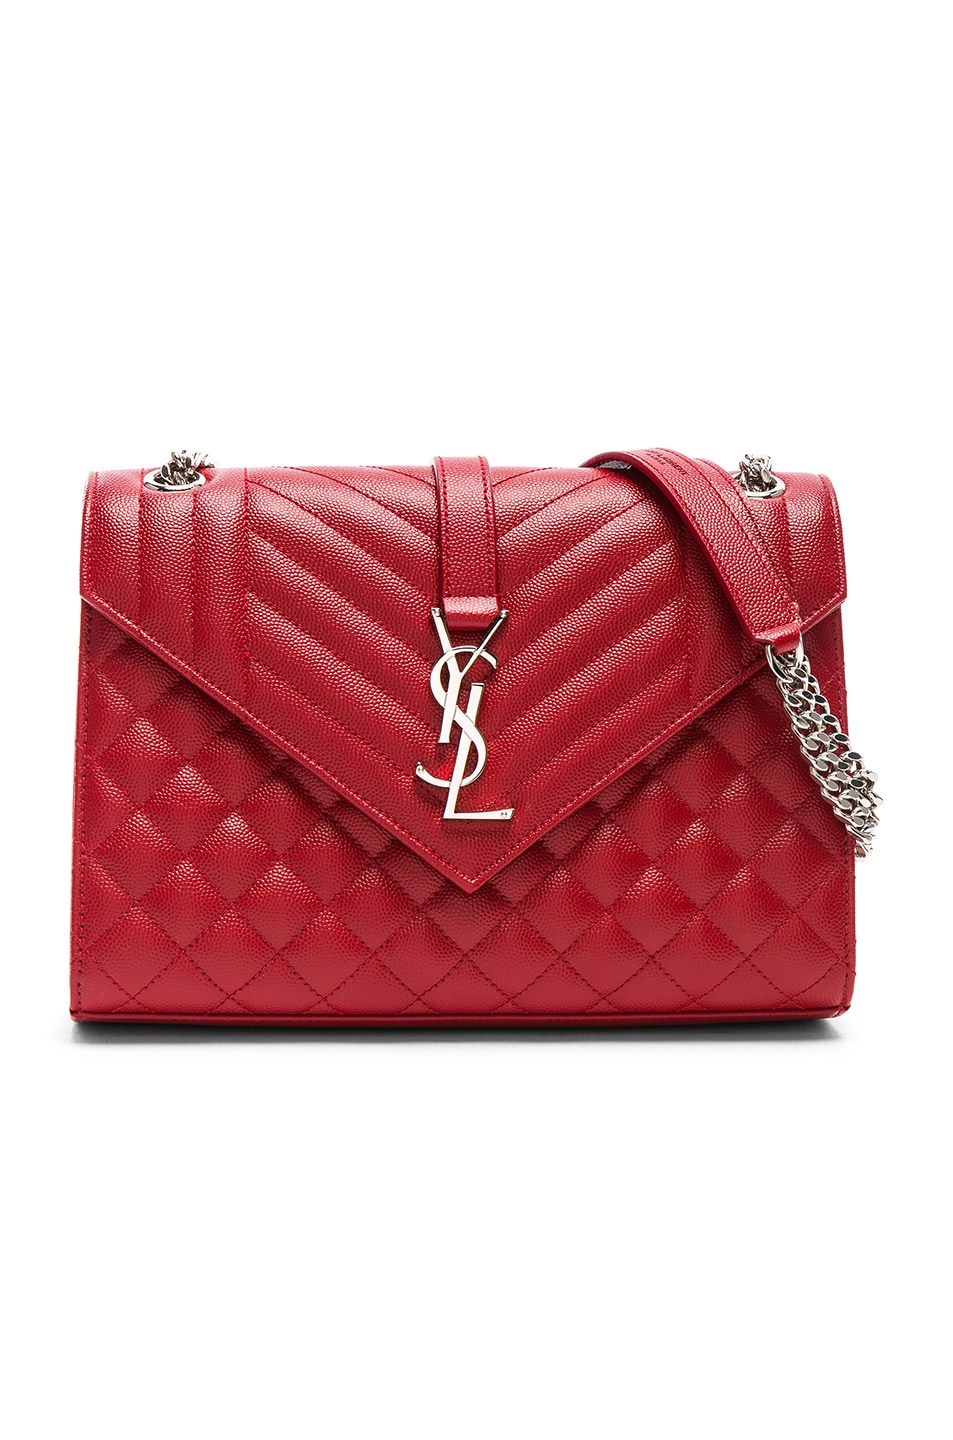 Image 1 of Saint Laurent Medium Monogramme Envelope Chain Bag in Eros Red